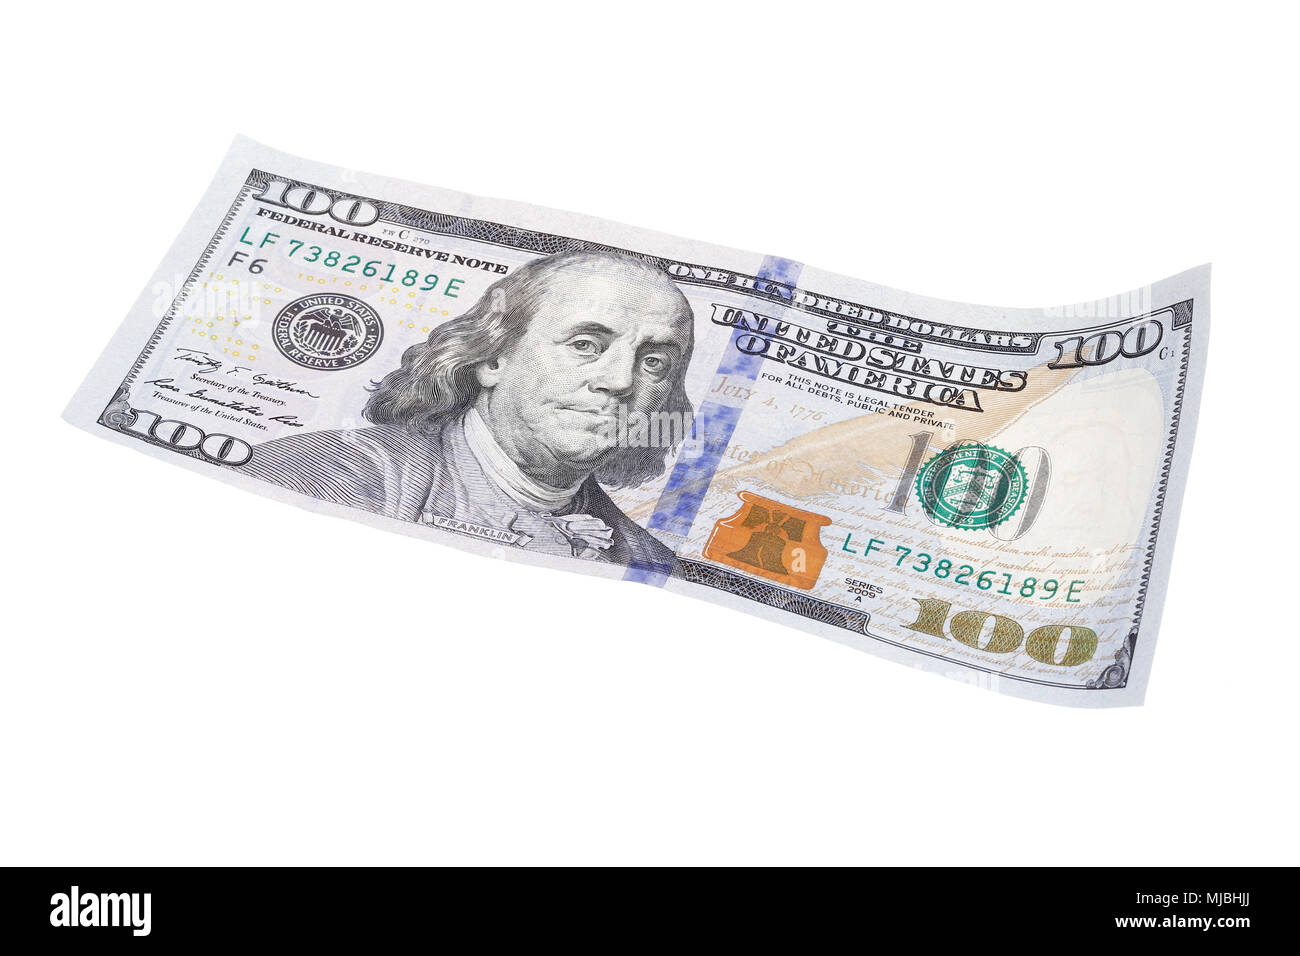 US banknote 100 dollars isolated on white background. Stock Photo